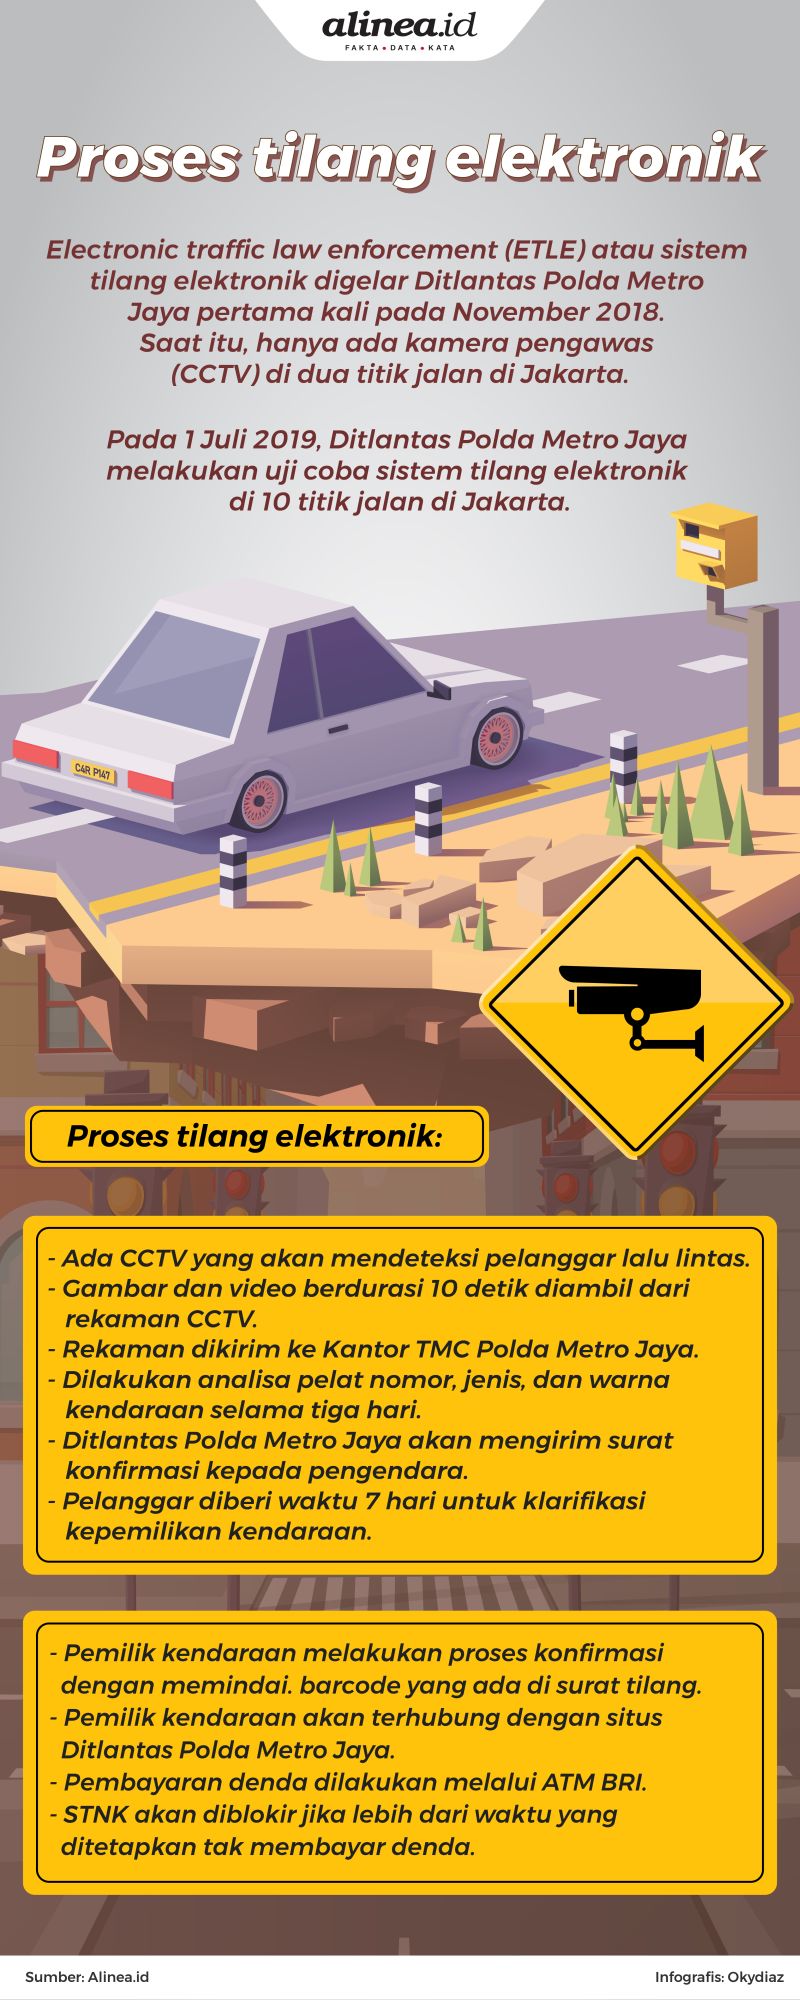 Tilang elektronik mengandalkan kamera pengawas yang dipasang di beberapa titik jalan.